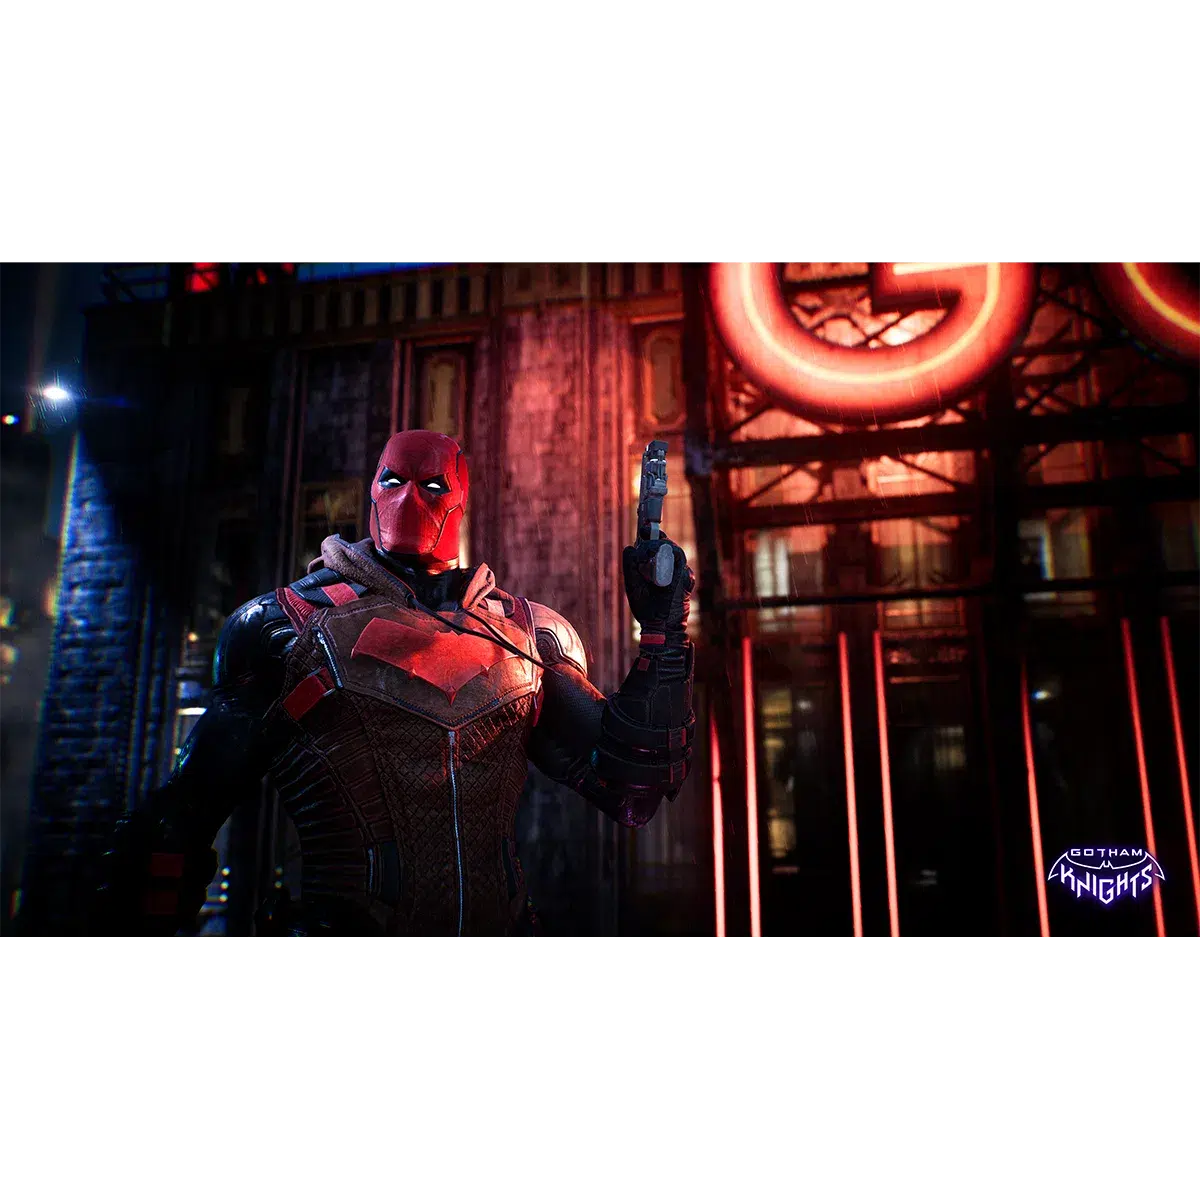 Gotham Knights (Xbox Series X) Image 6